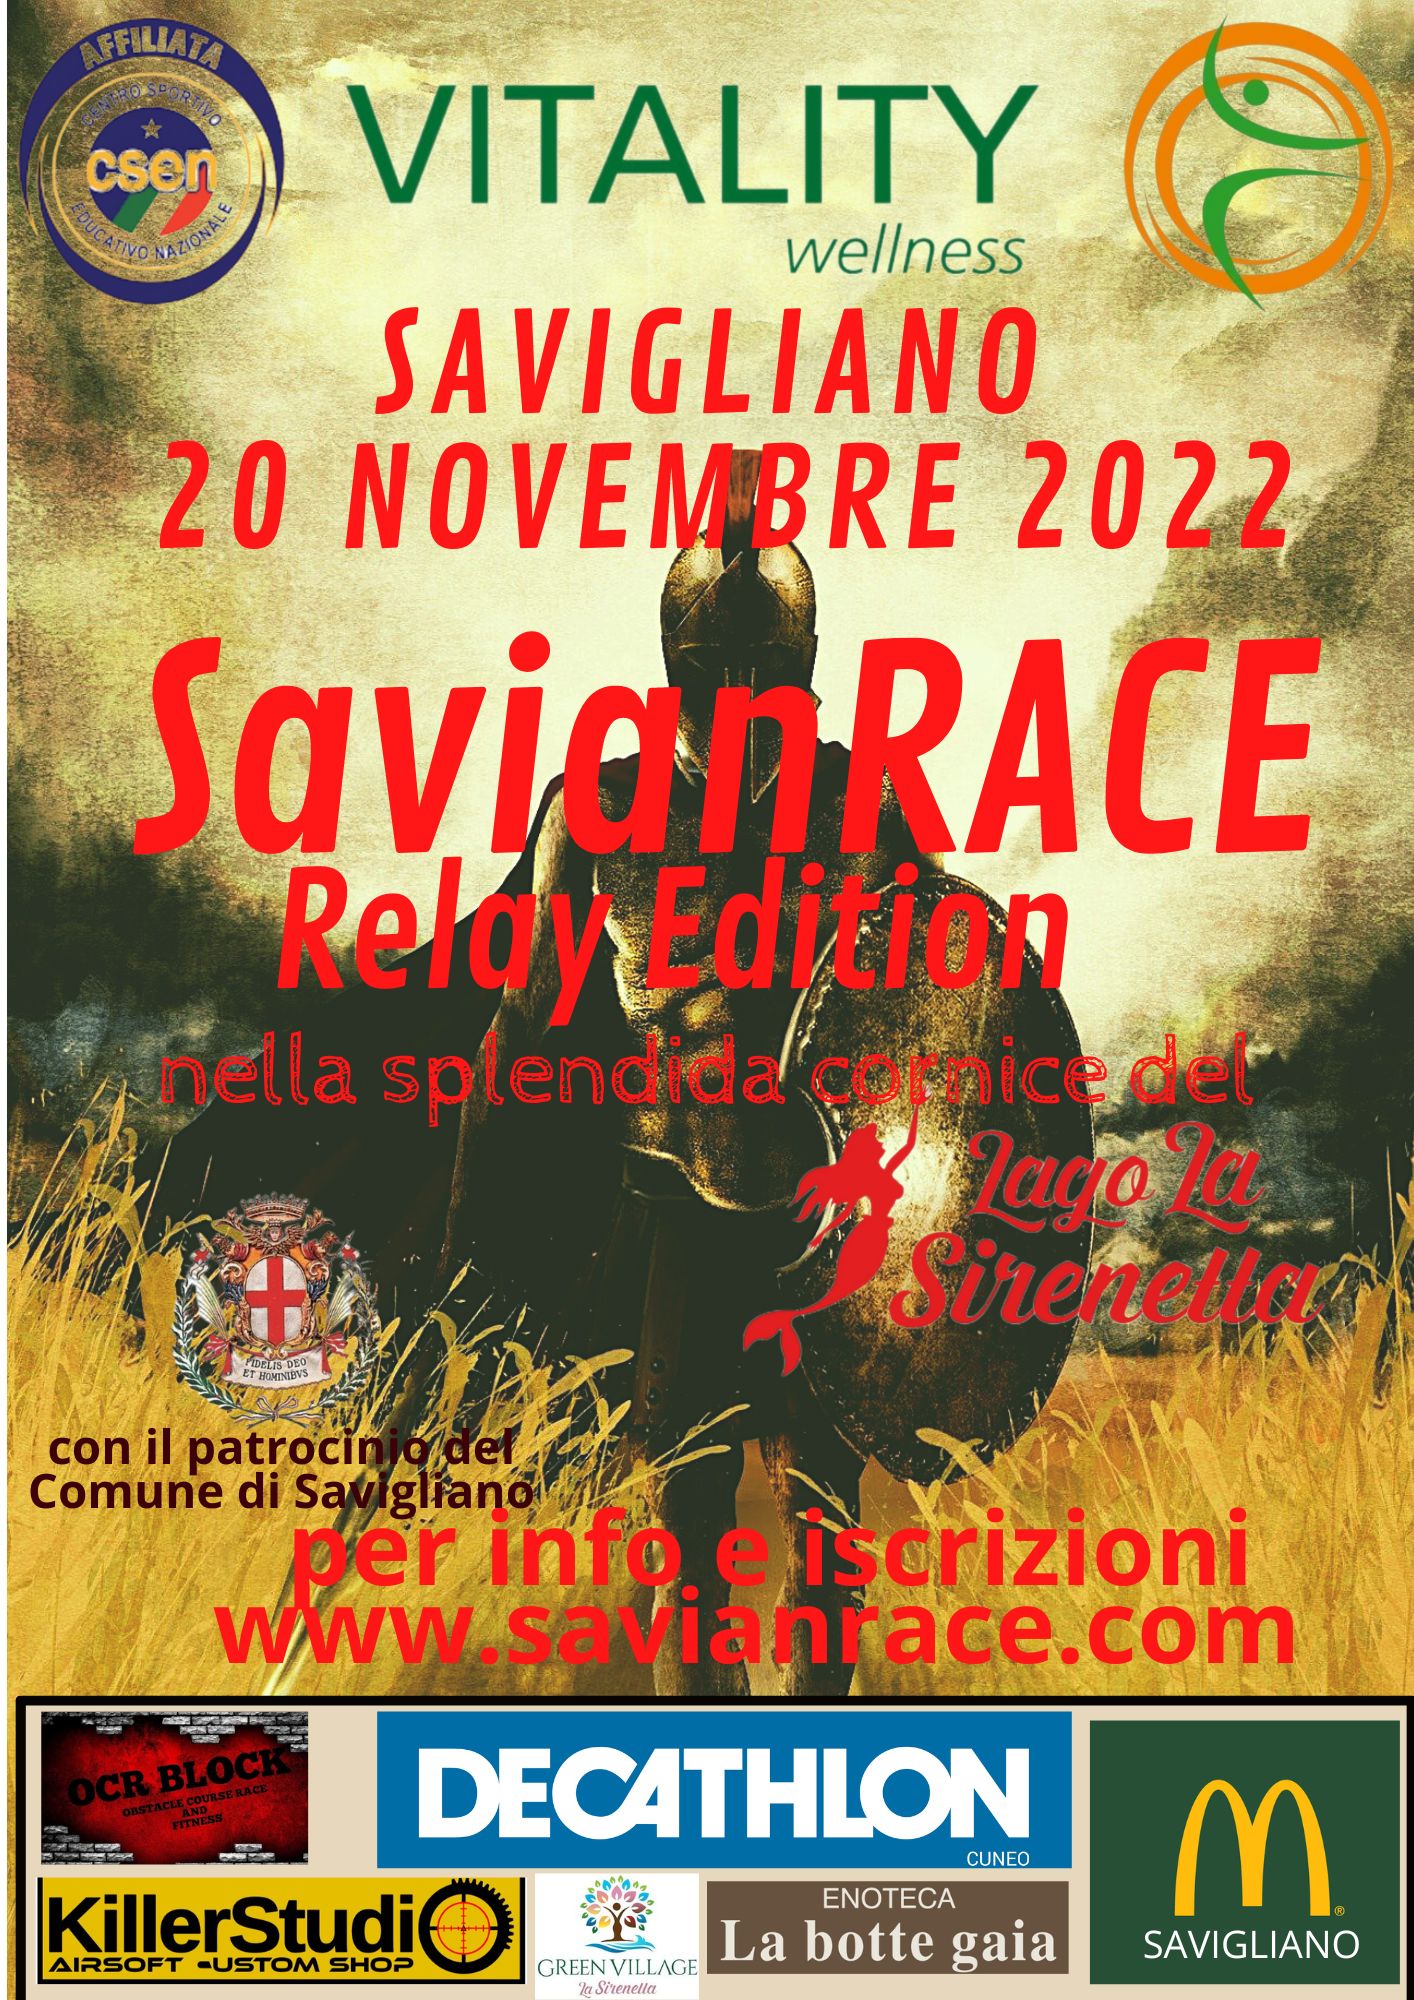 savianrace-relay-edition